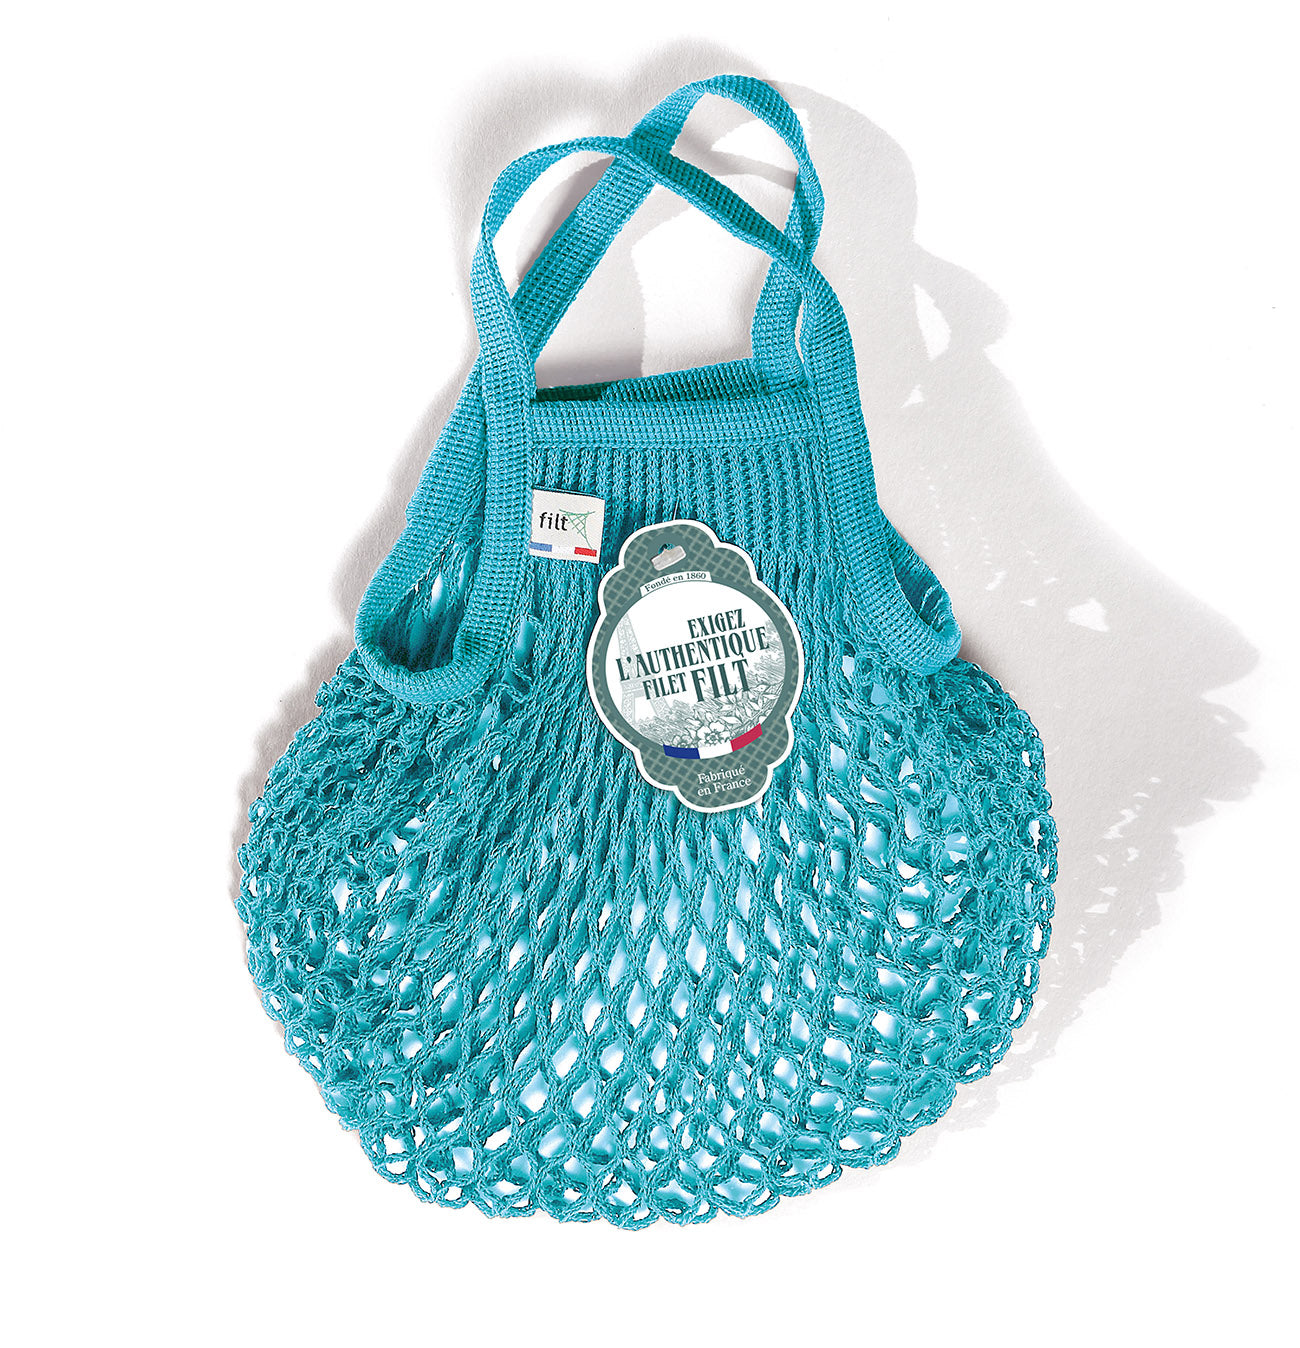 Filt Mini Bag in Turquoise - Bag - Filt - Bags - Brand_Filt - Textiles_Shoppers - 301_BleuJoyau